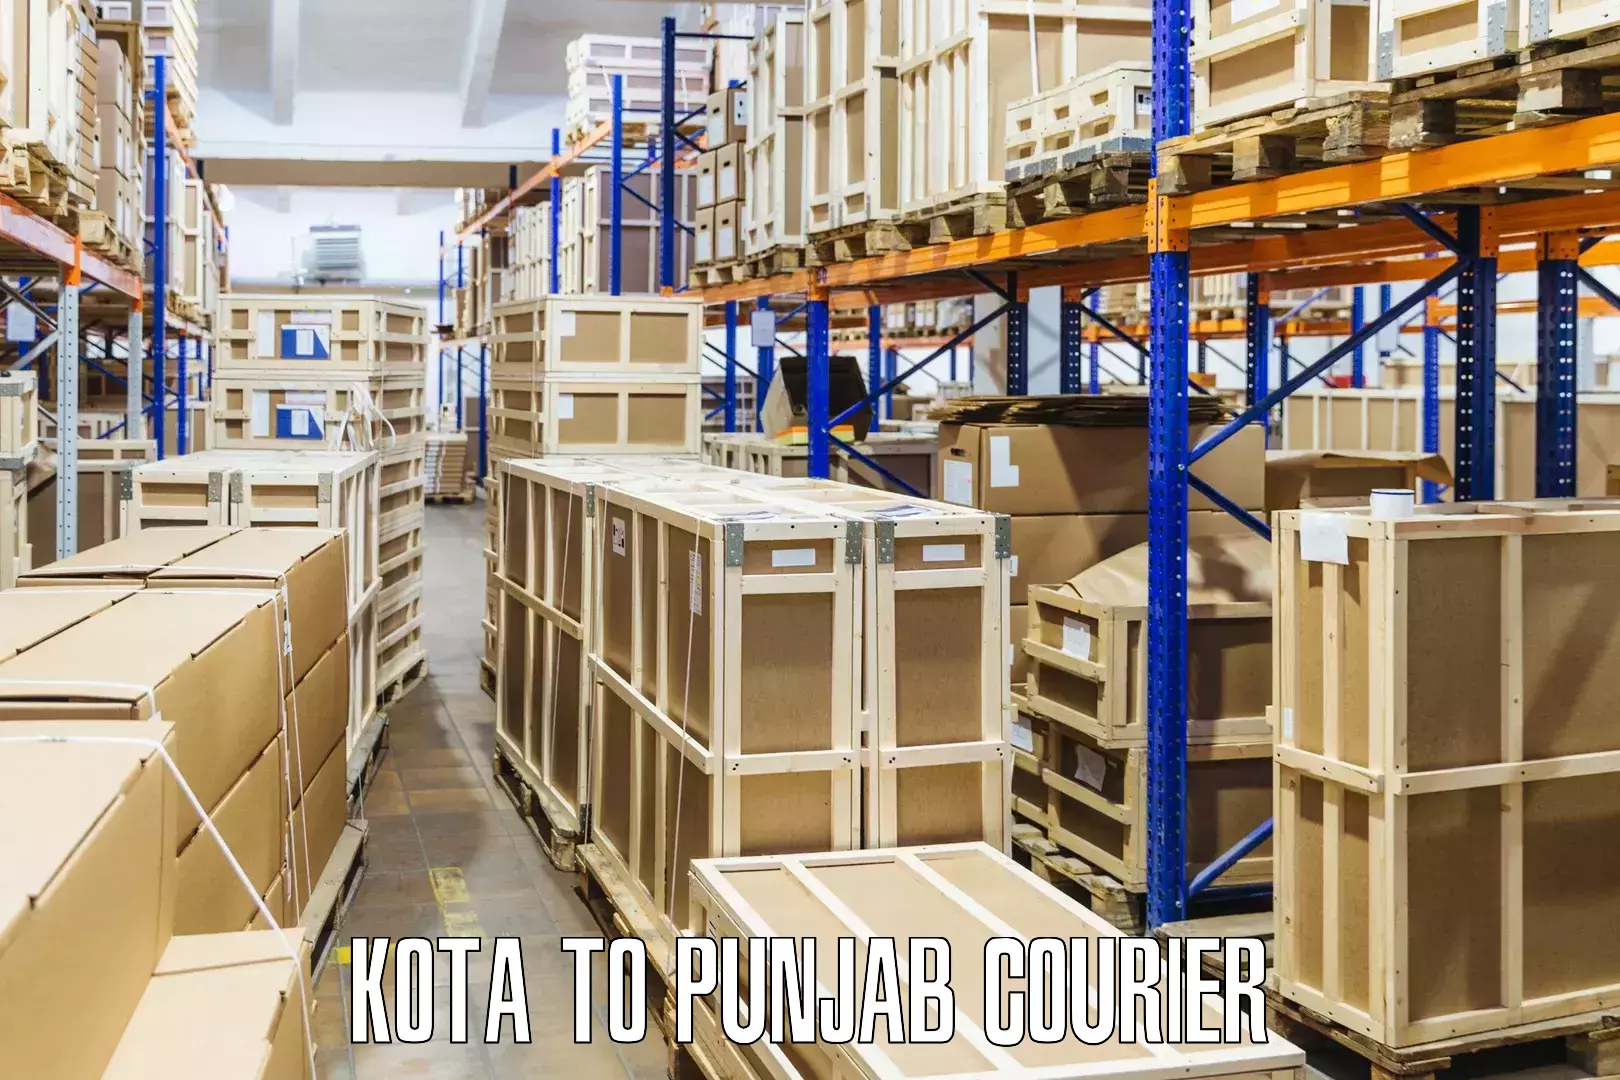 Courier service partnerships Kota to Punjab